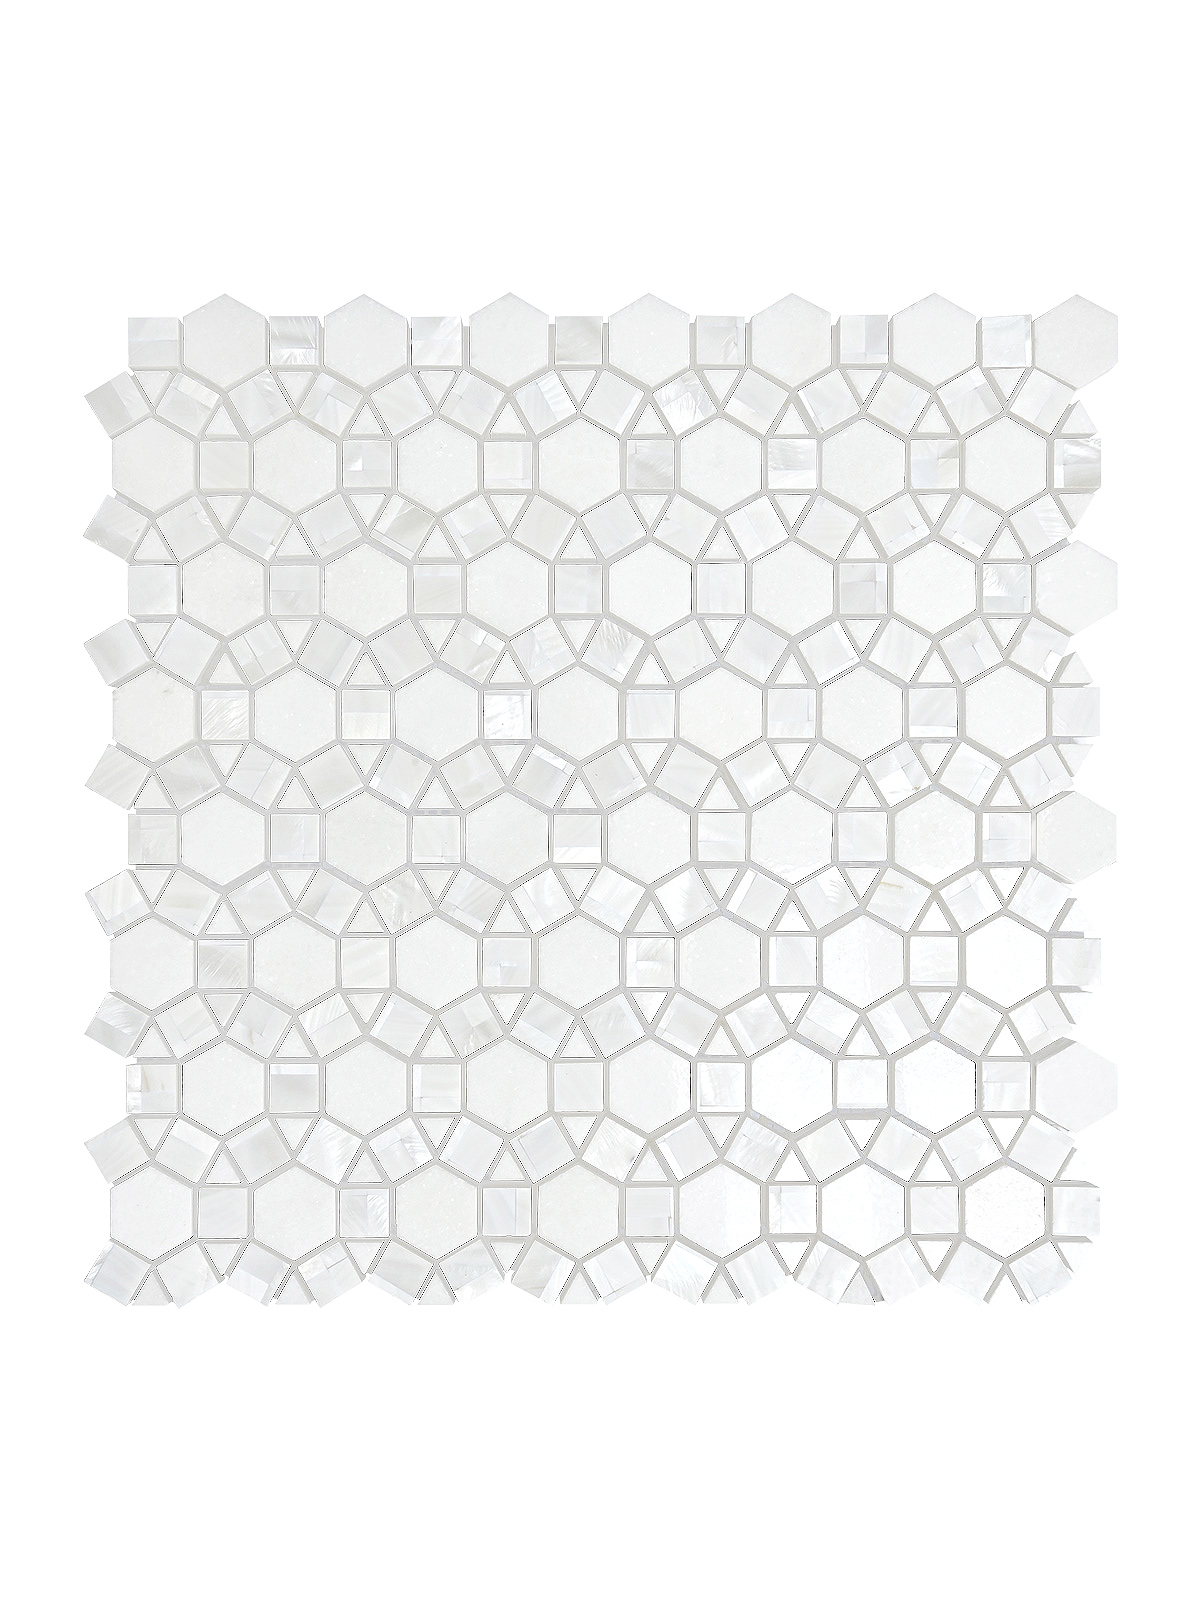 Pearl White Marble Mosaic Backsplash Tile BA7002 4